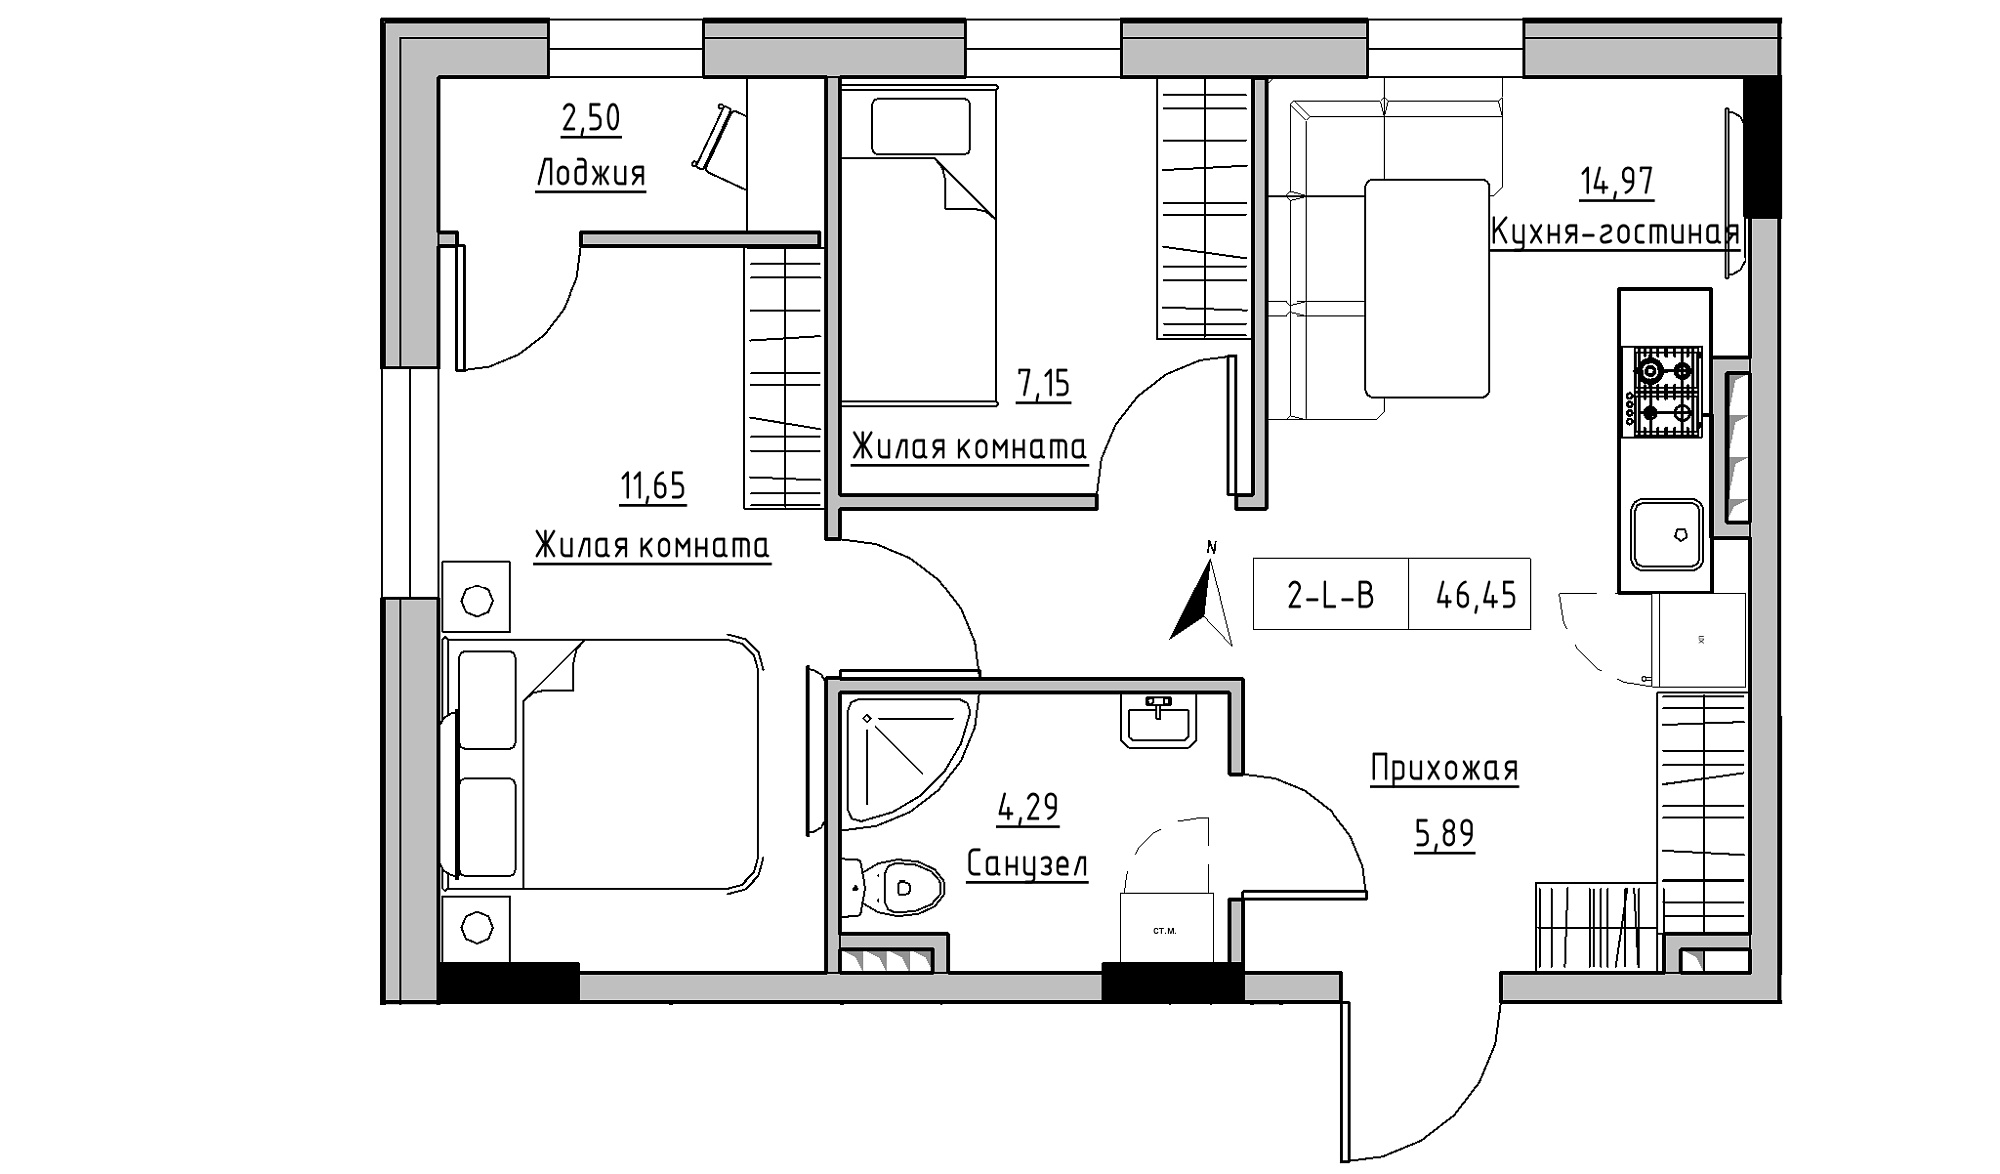 Planning 2-rm flats area 46.45m2, KS-025-03/0006.